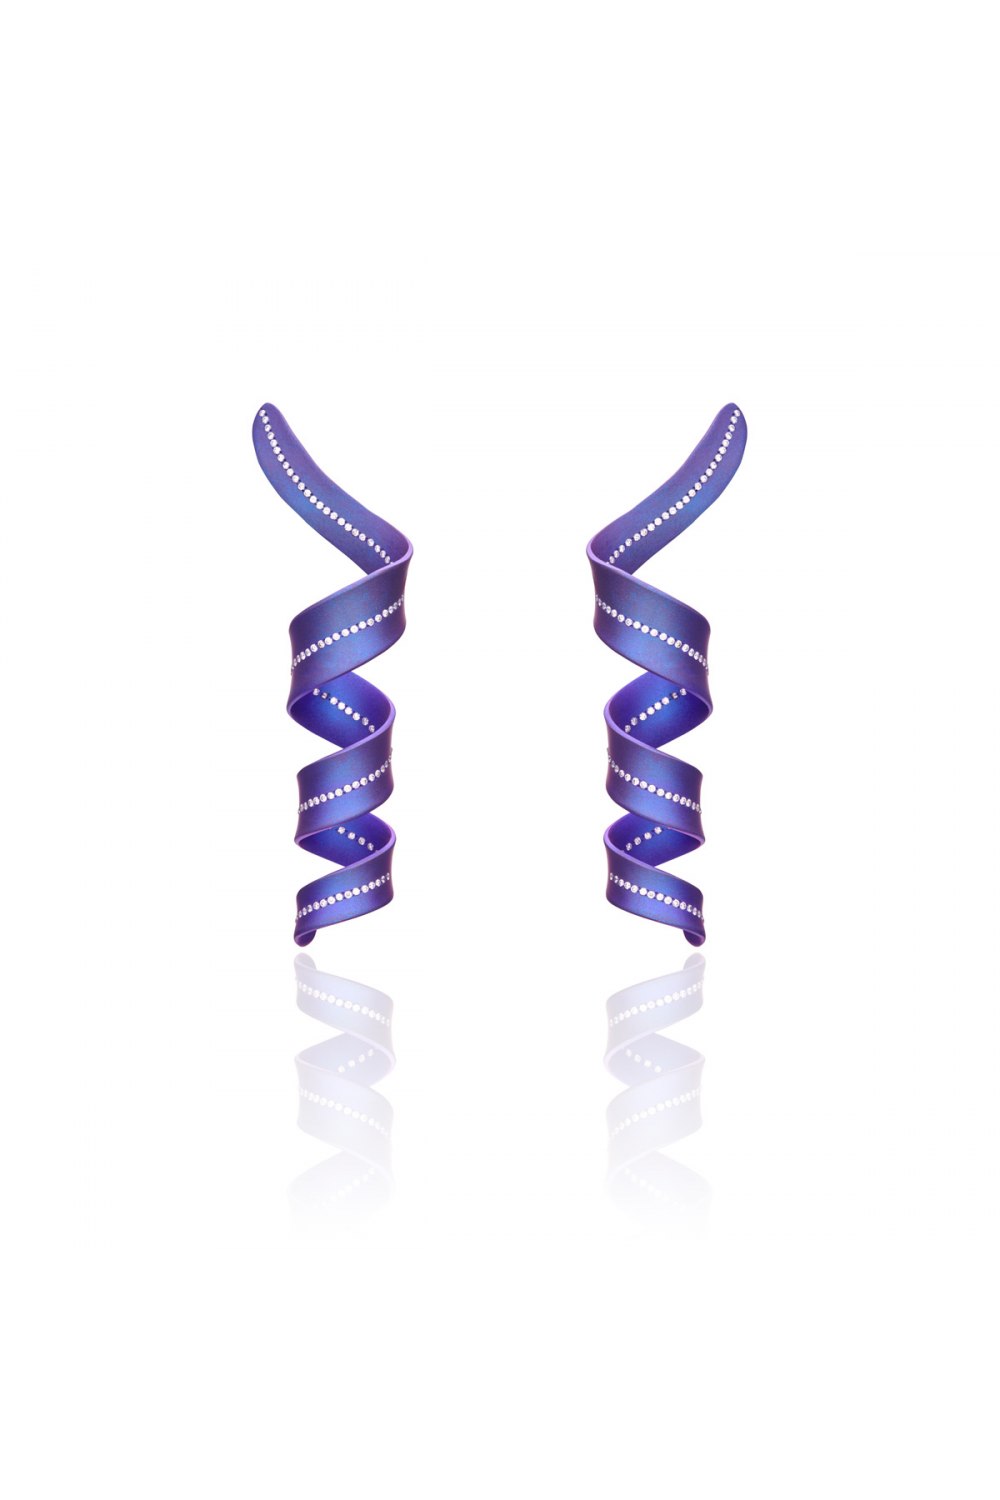 SerpenTEEN Purple Titanium Diamond Earrings